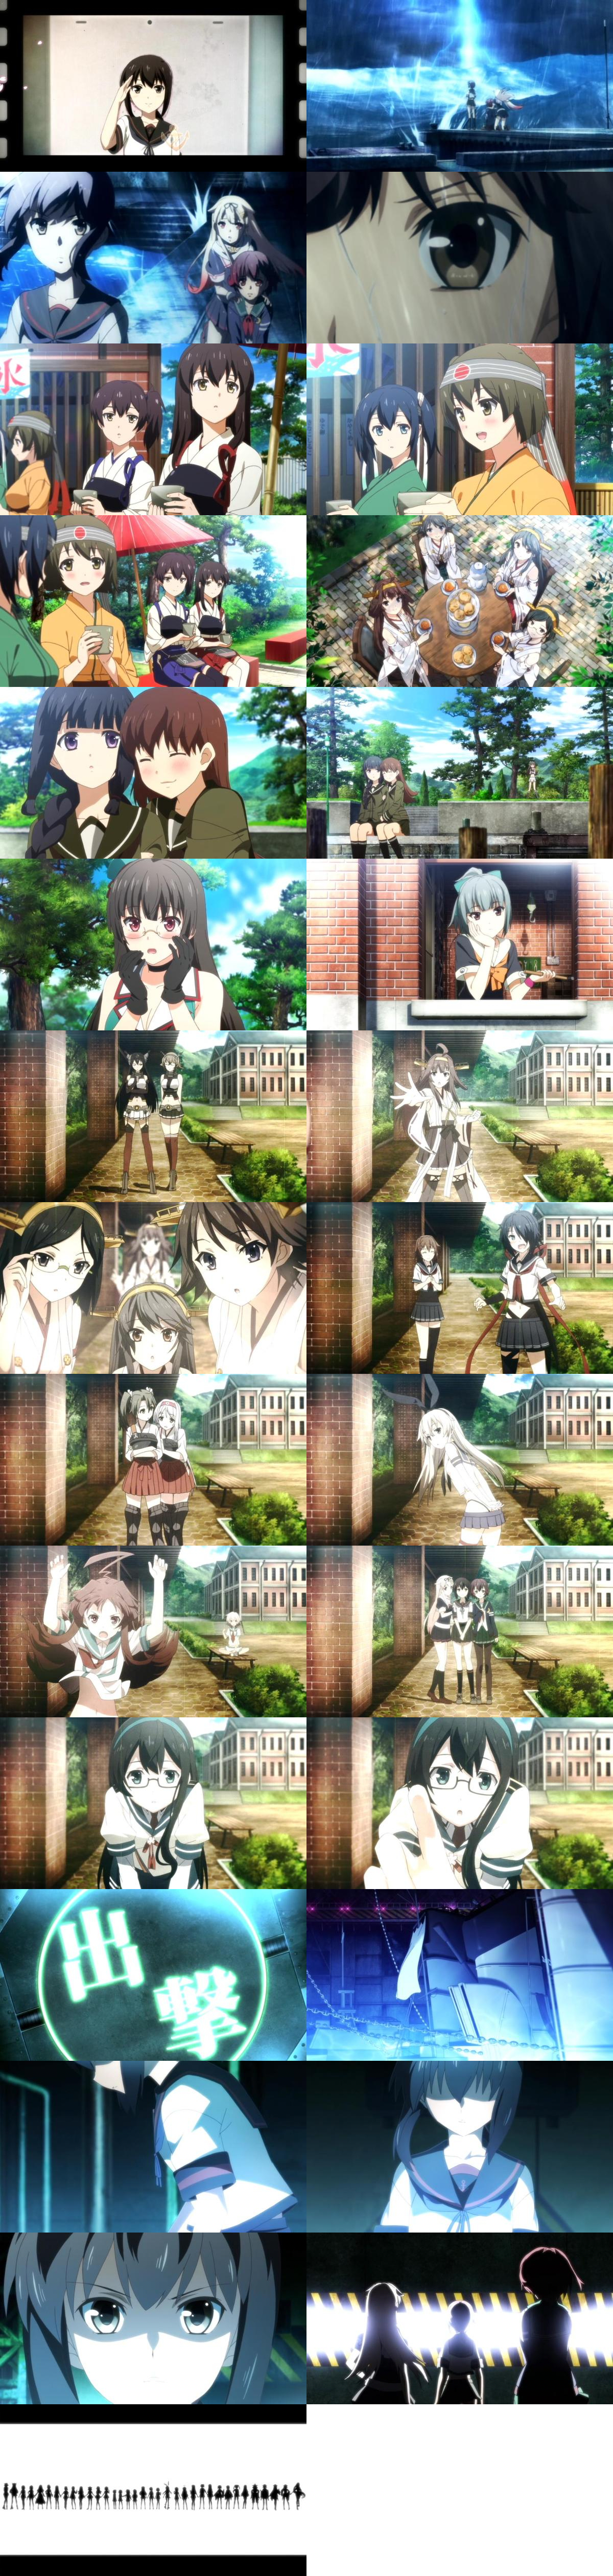 Kantai Collection Anime Film Promotional Video Screencaps - Haruhichan